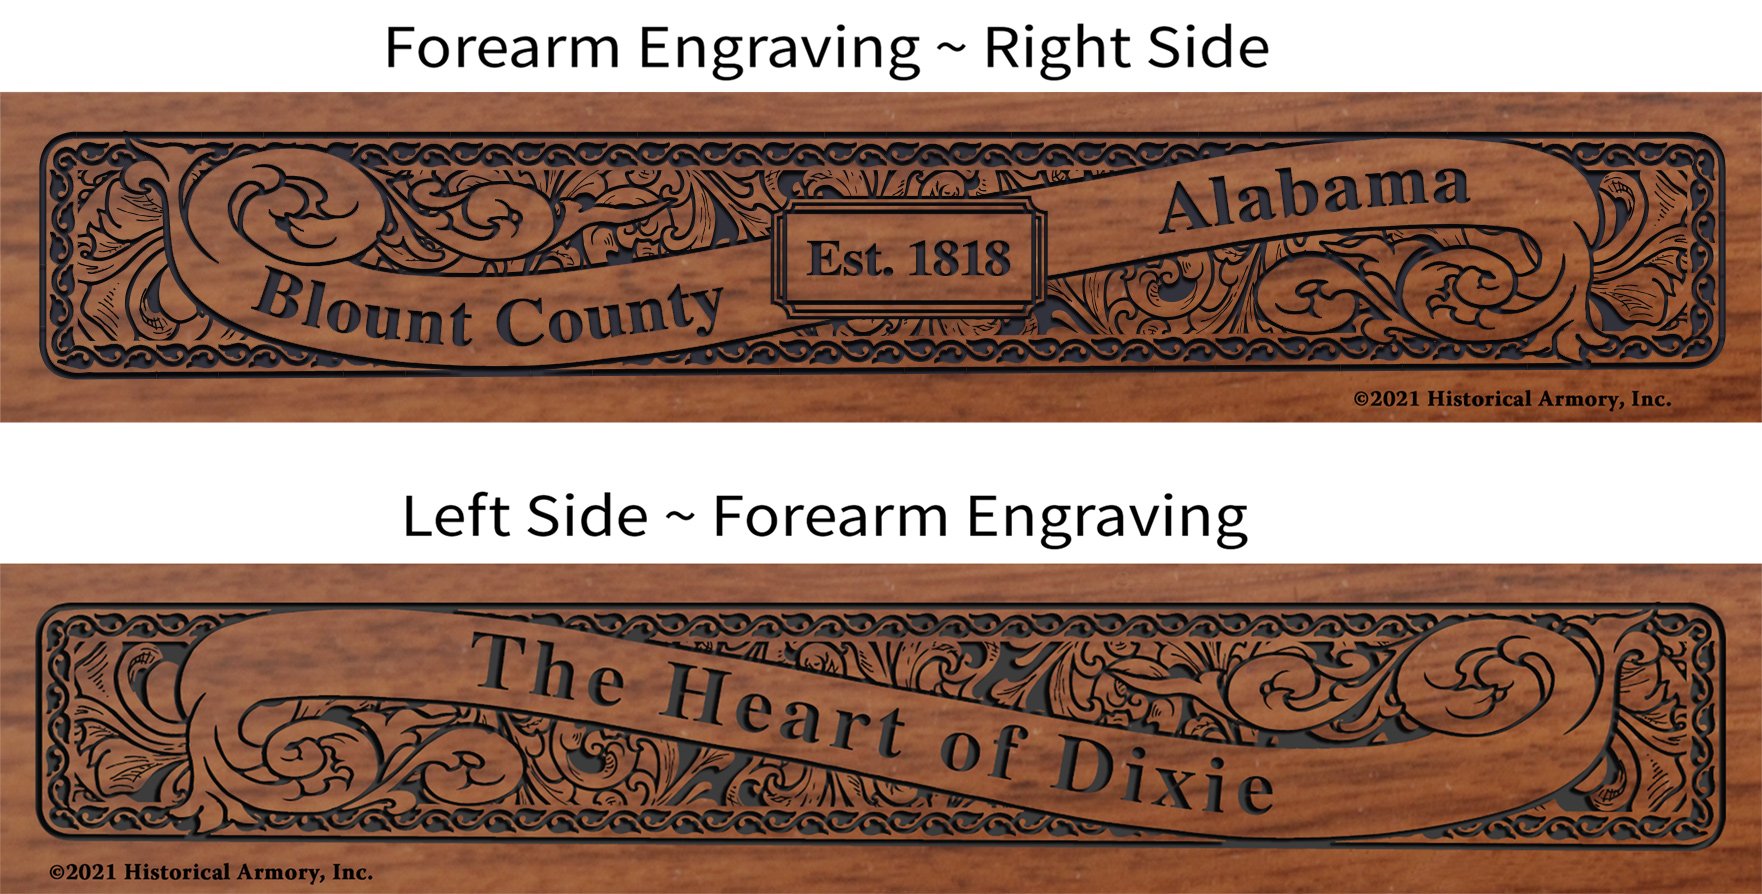 Blount  County Alabama Establishment and Motto History Engraved Rifle Forearm